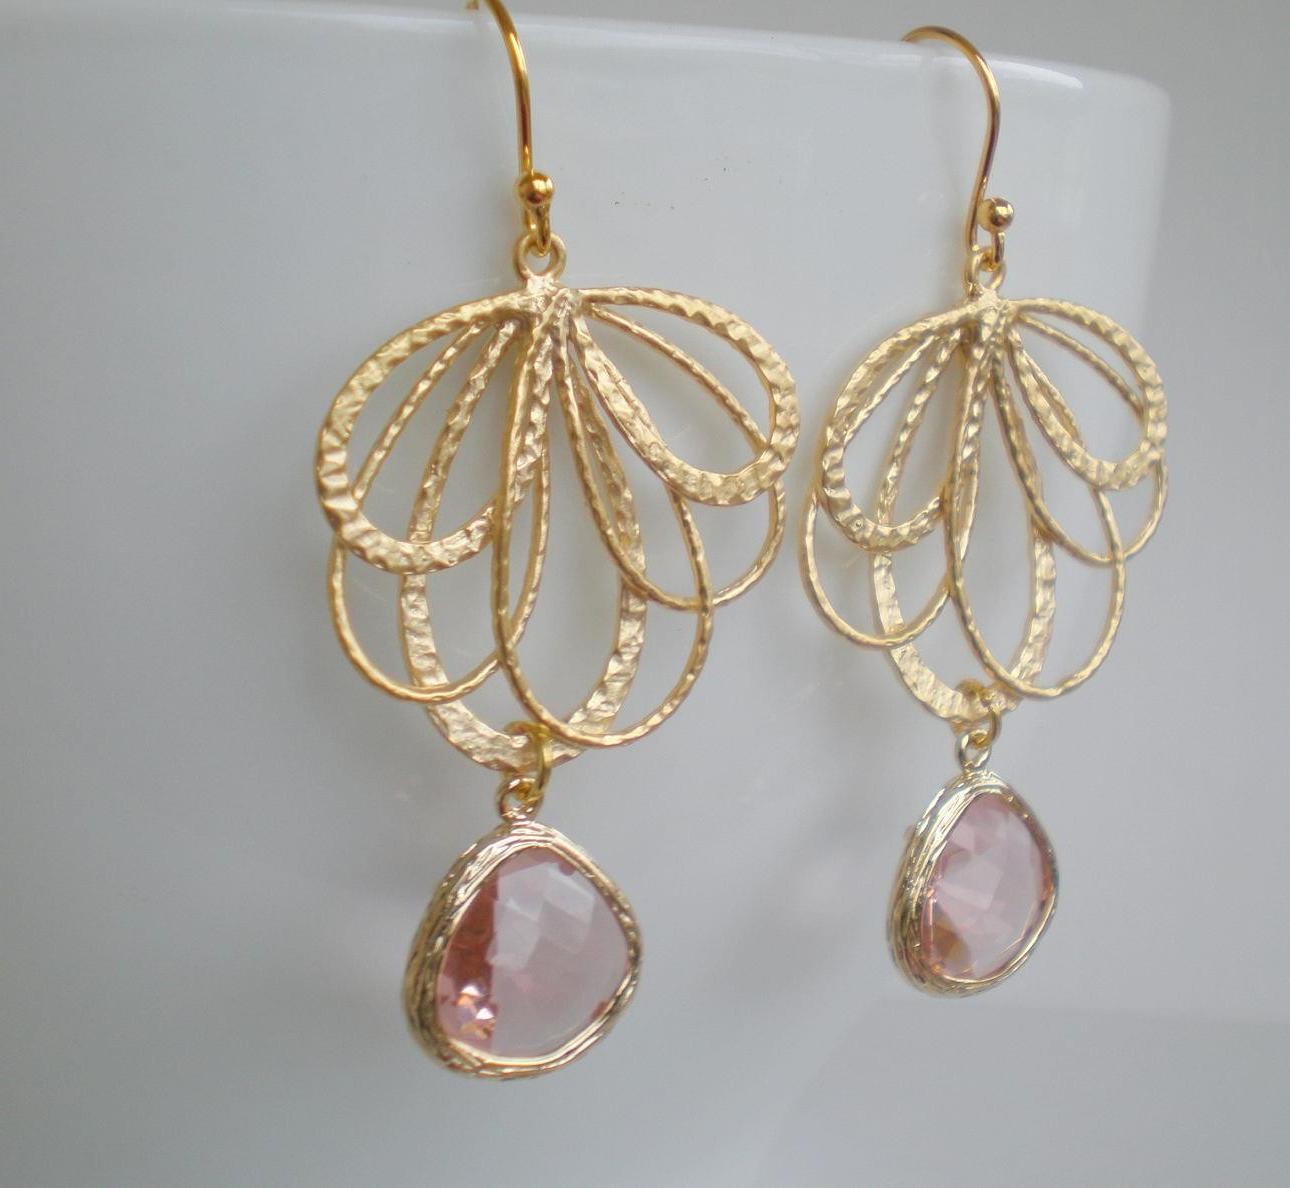 Gold Feather Fan with Peach-Pink Stone Earrings. From DanaCastle